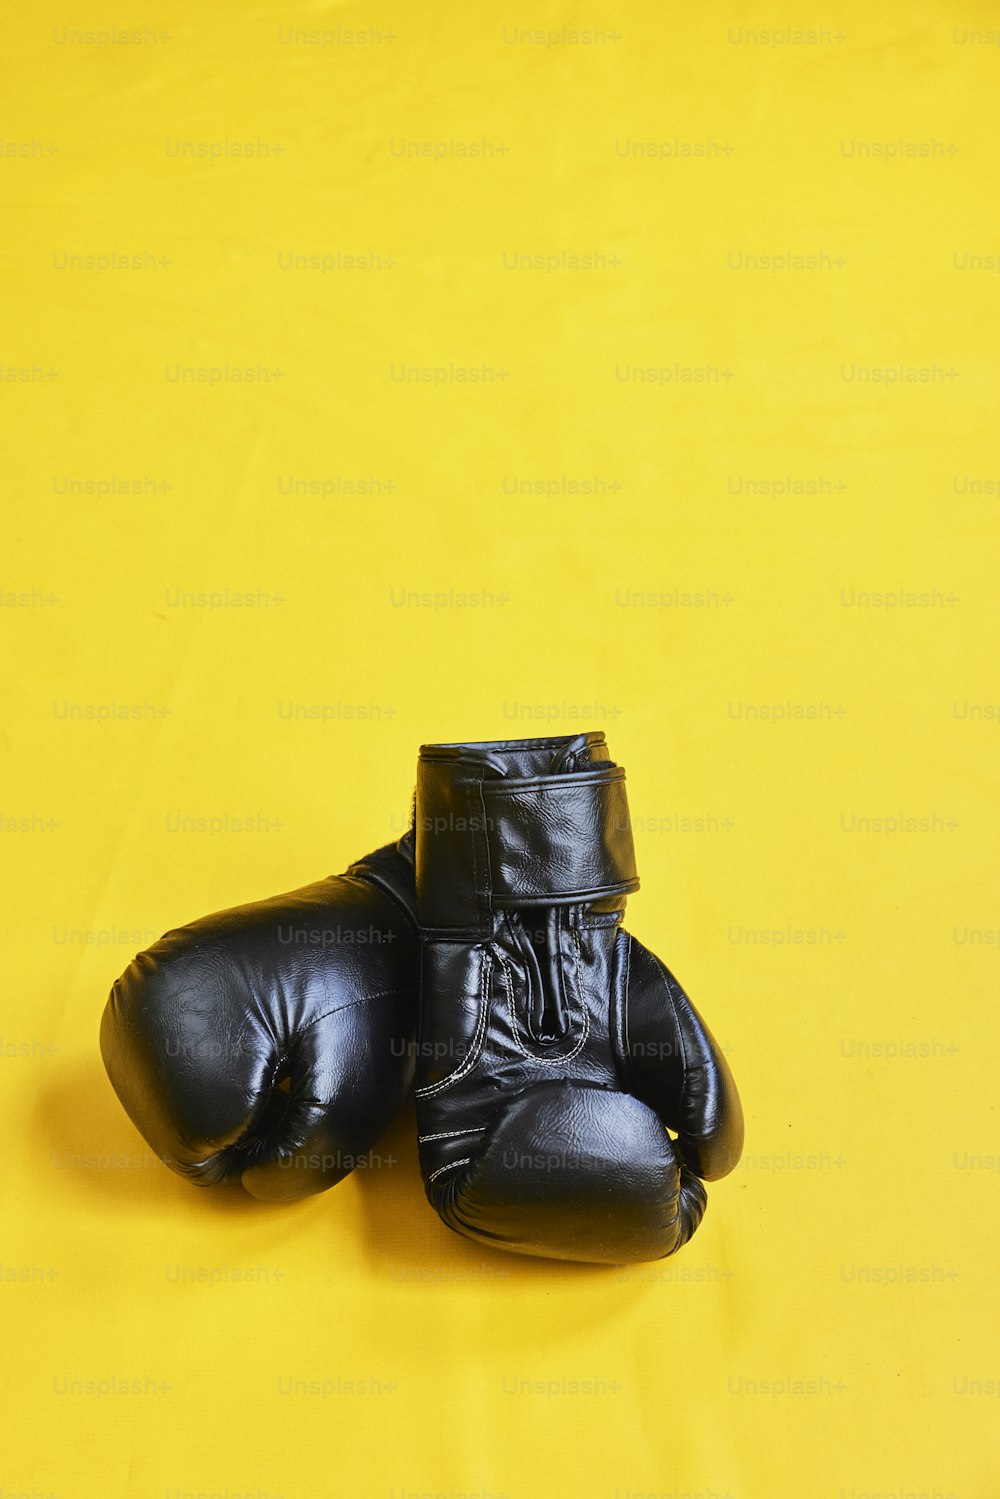 Un par de guantes de boxeo negros sobre fondo amarillo